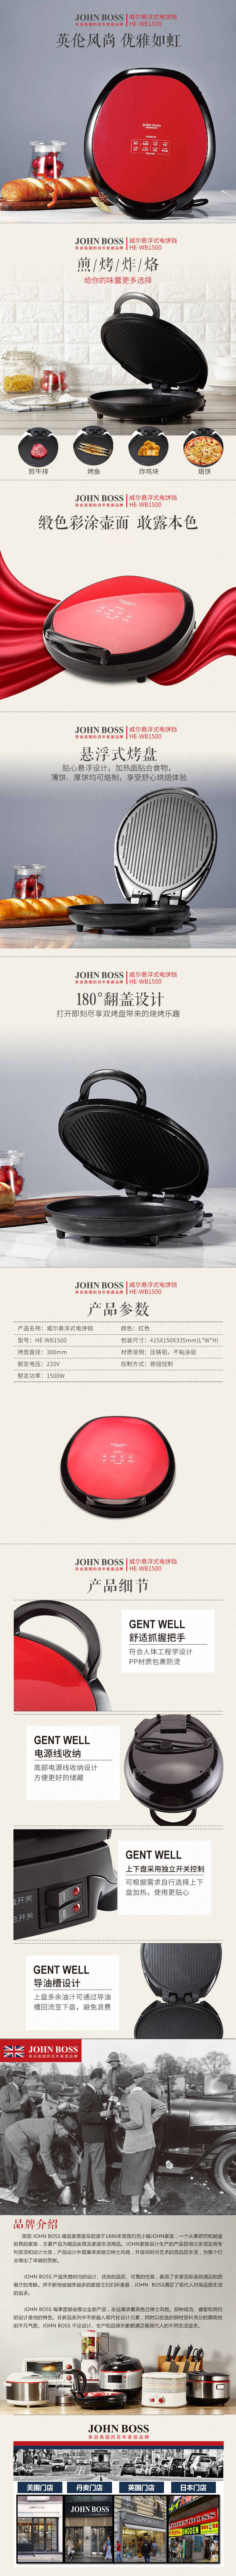 JOHN BOSS 威尔悬浮式电饼铛 HE-WB1500（仅限焦作地区积分兑换）